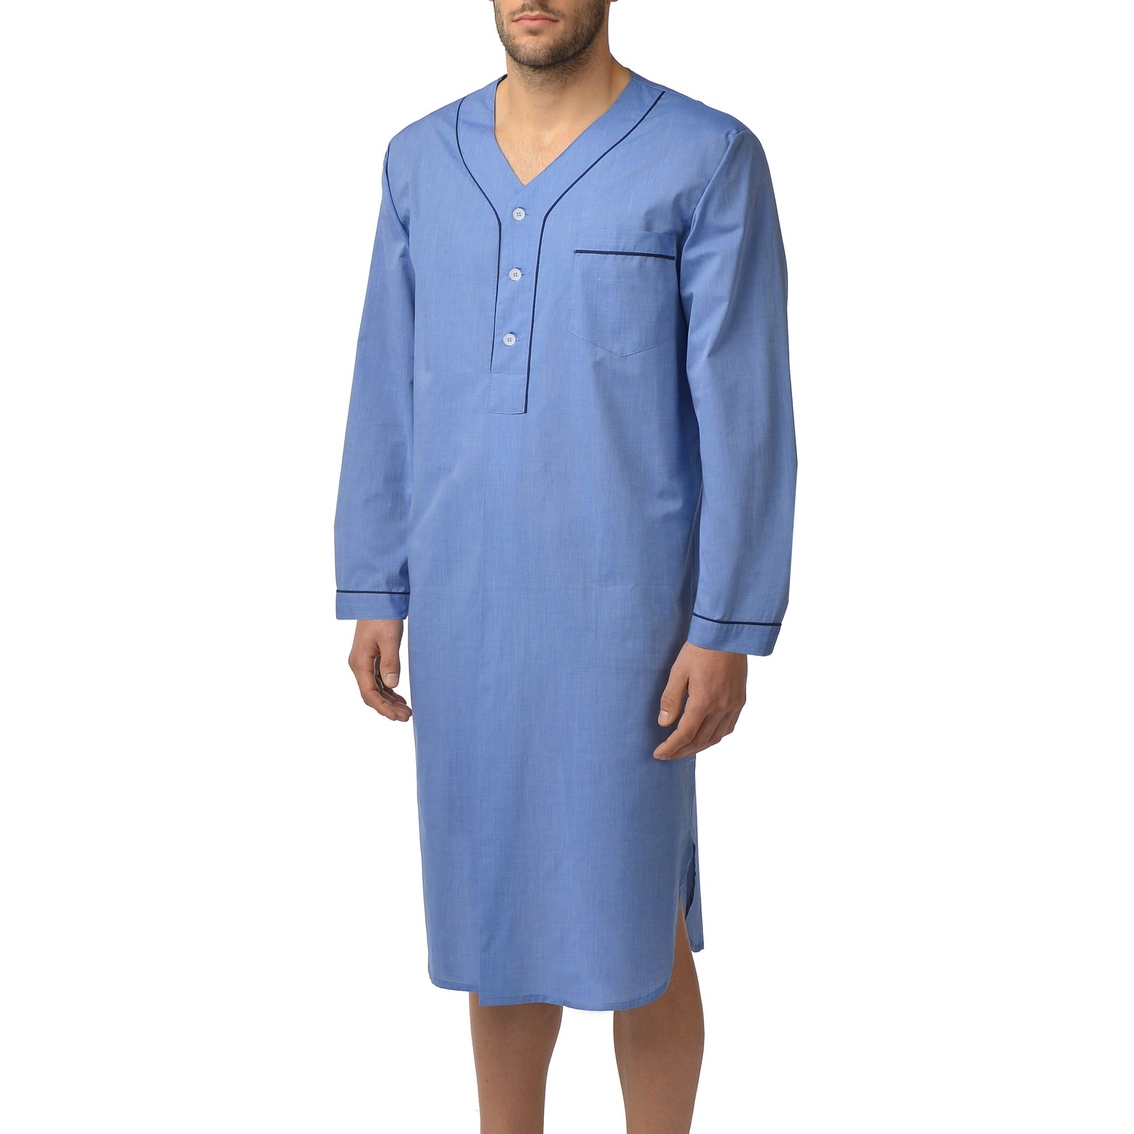 Majestic International Easy Care Nightshirt | Pajamas & Robes ...